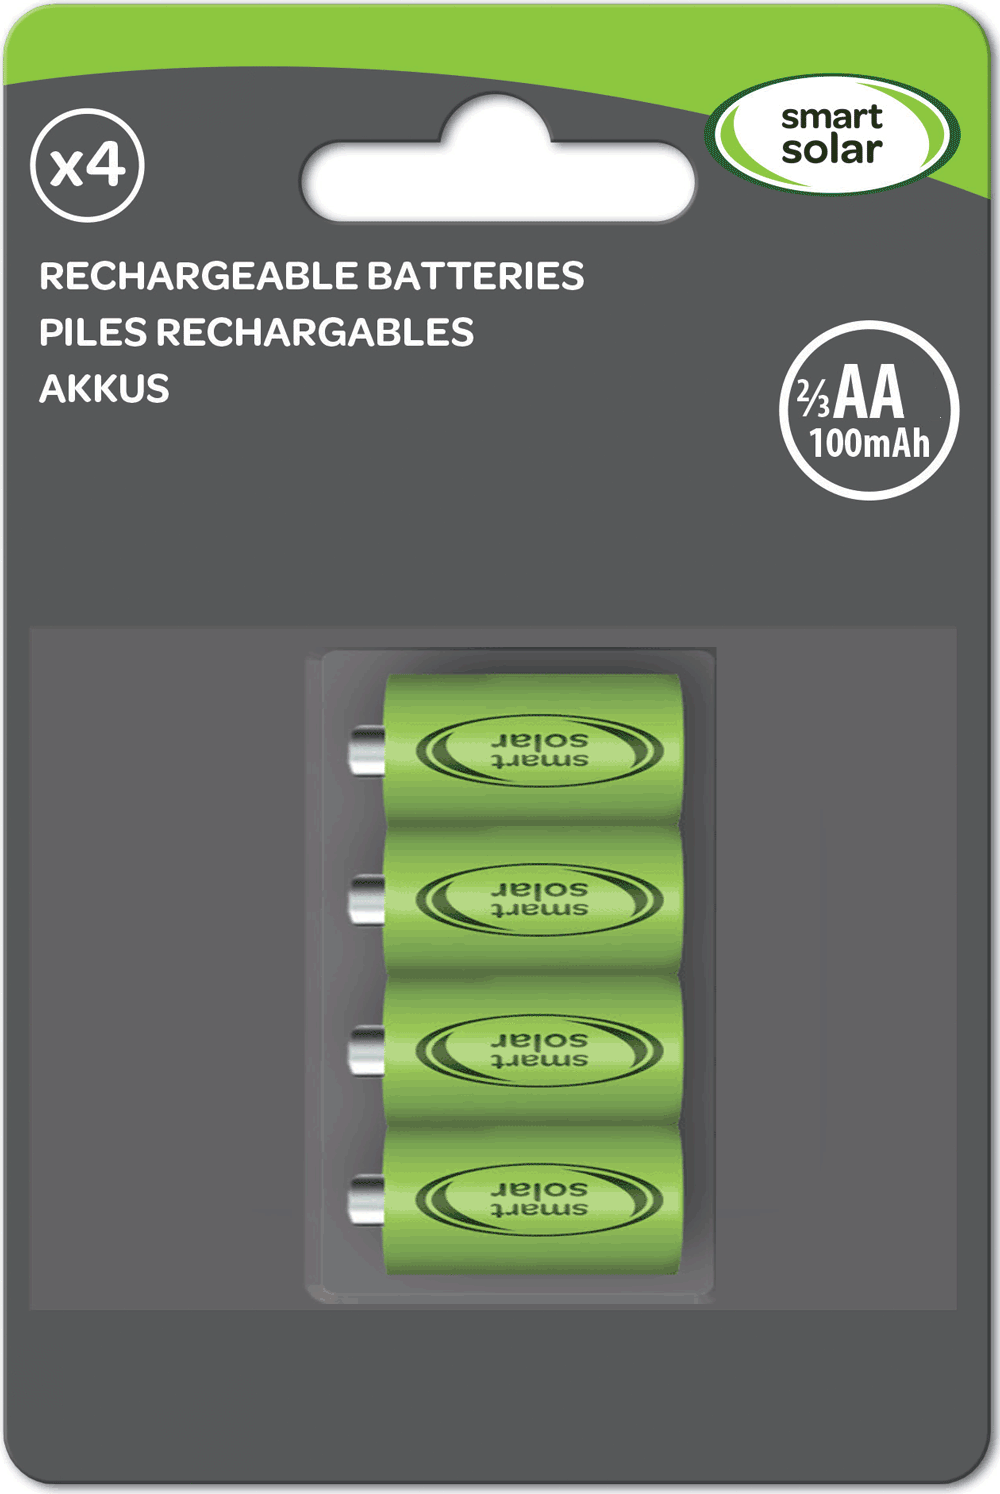 Smart Solar 23 AA 100 mAh Rechargeable Batteries 4pk